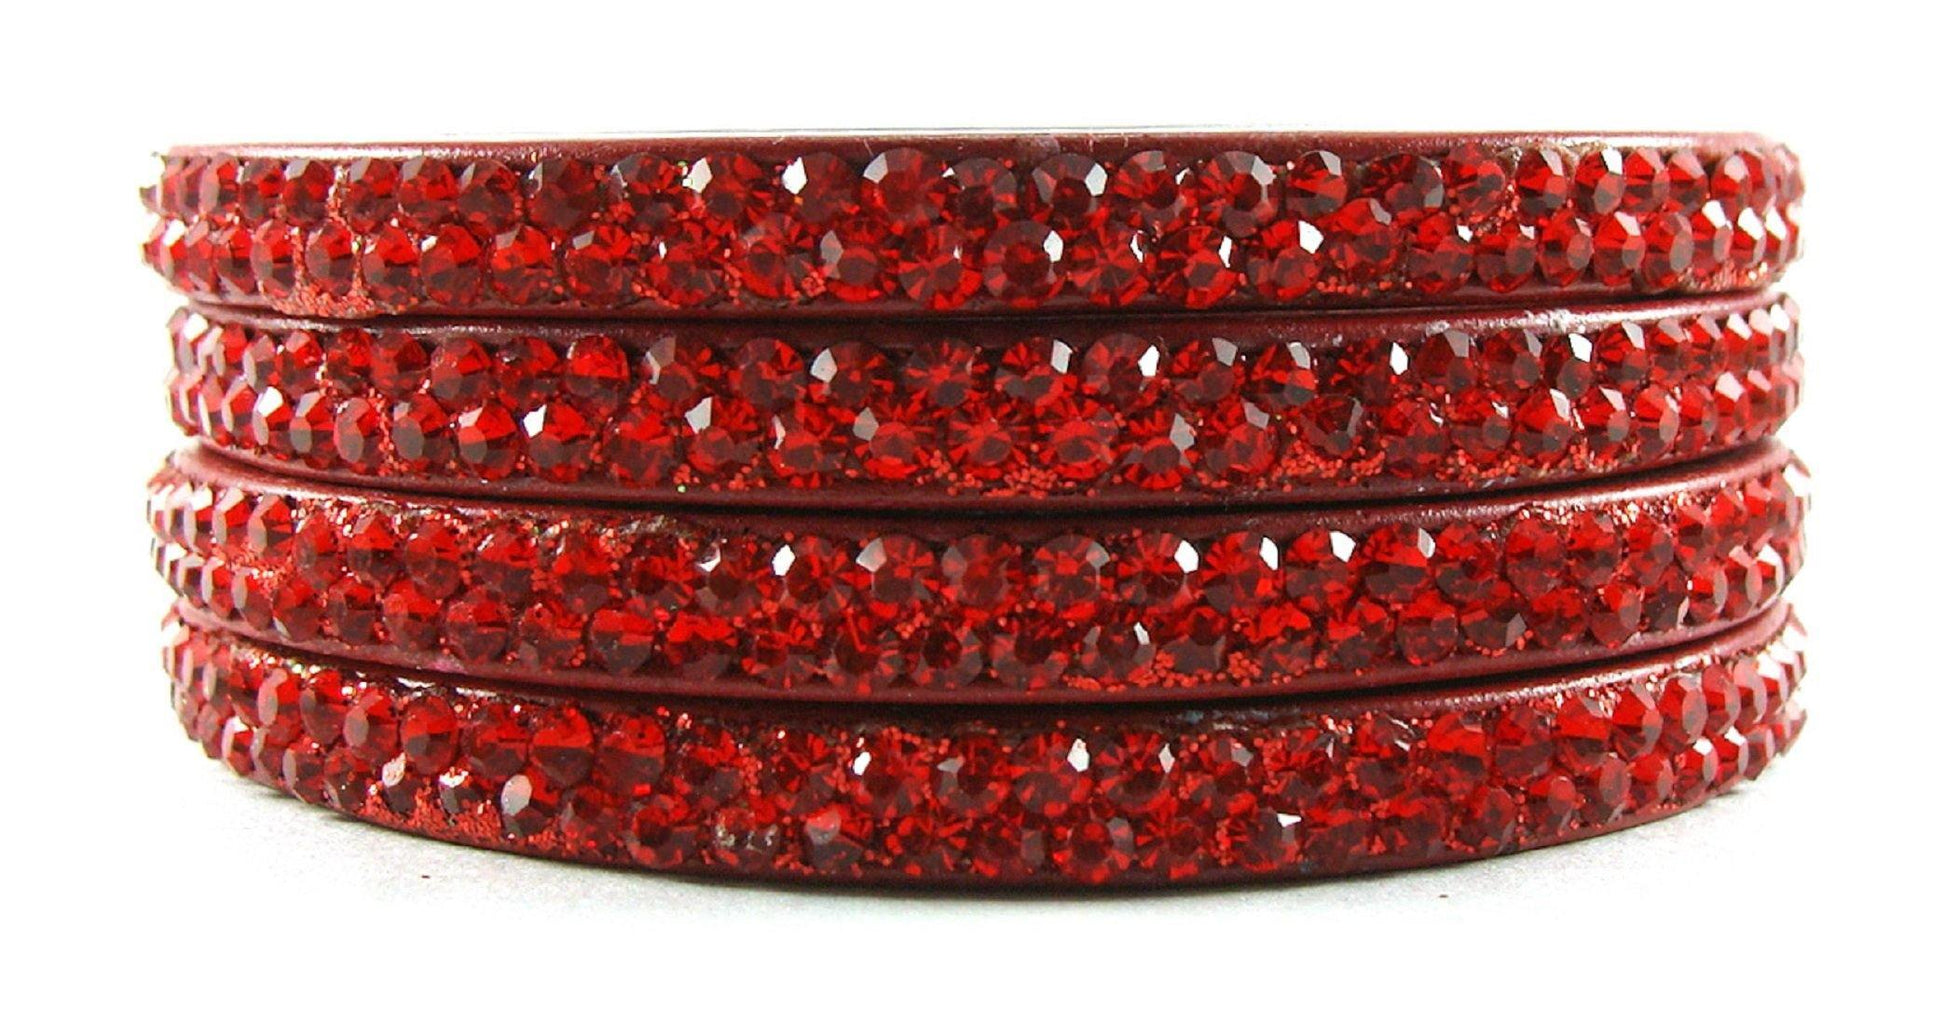 sukriti rajasthani red lac bangles for women - set of 4